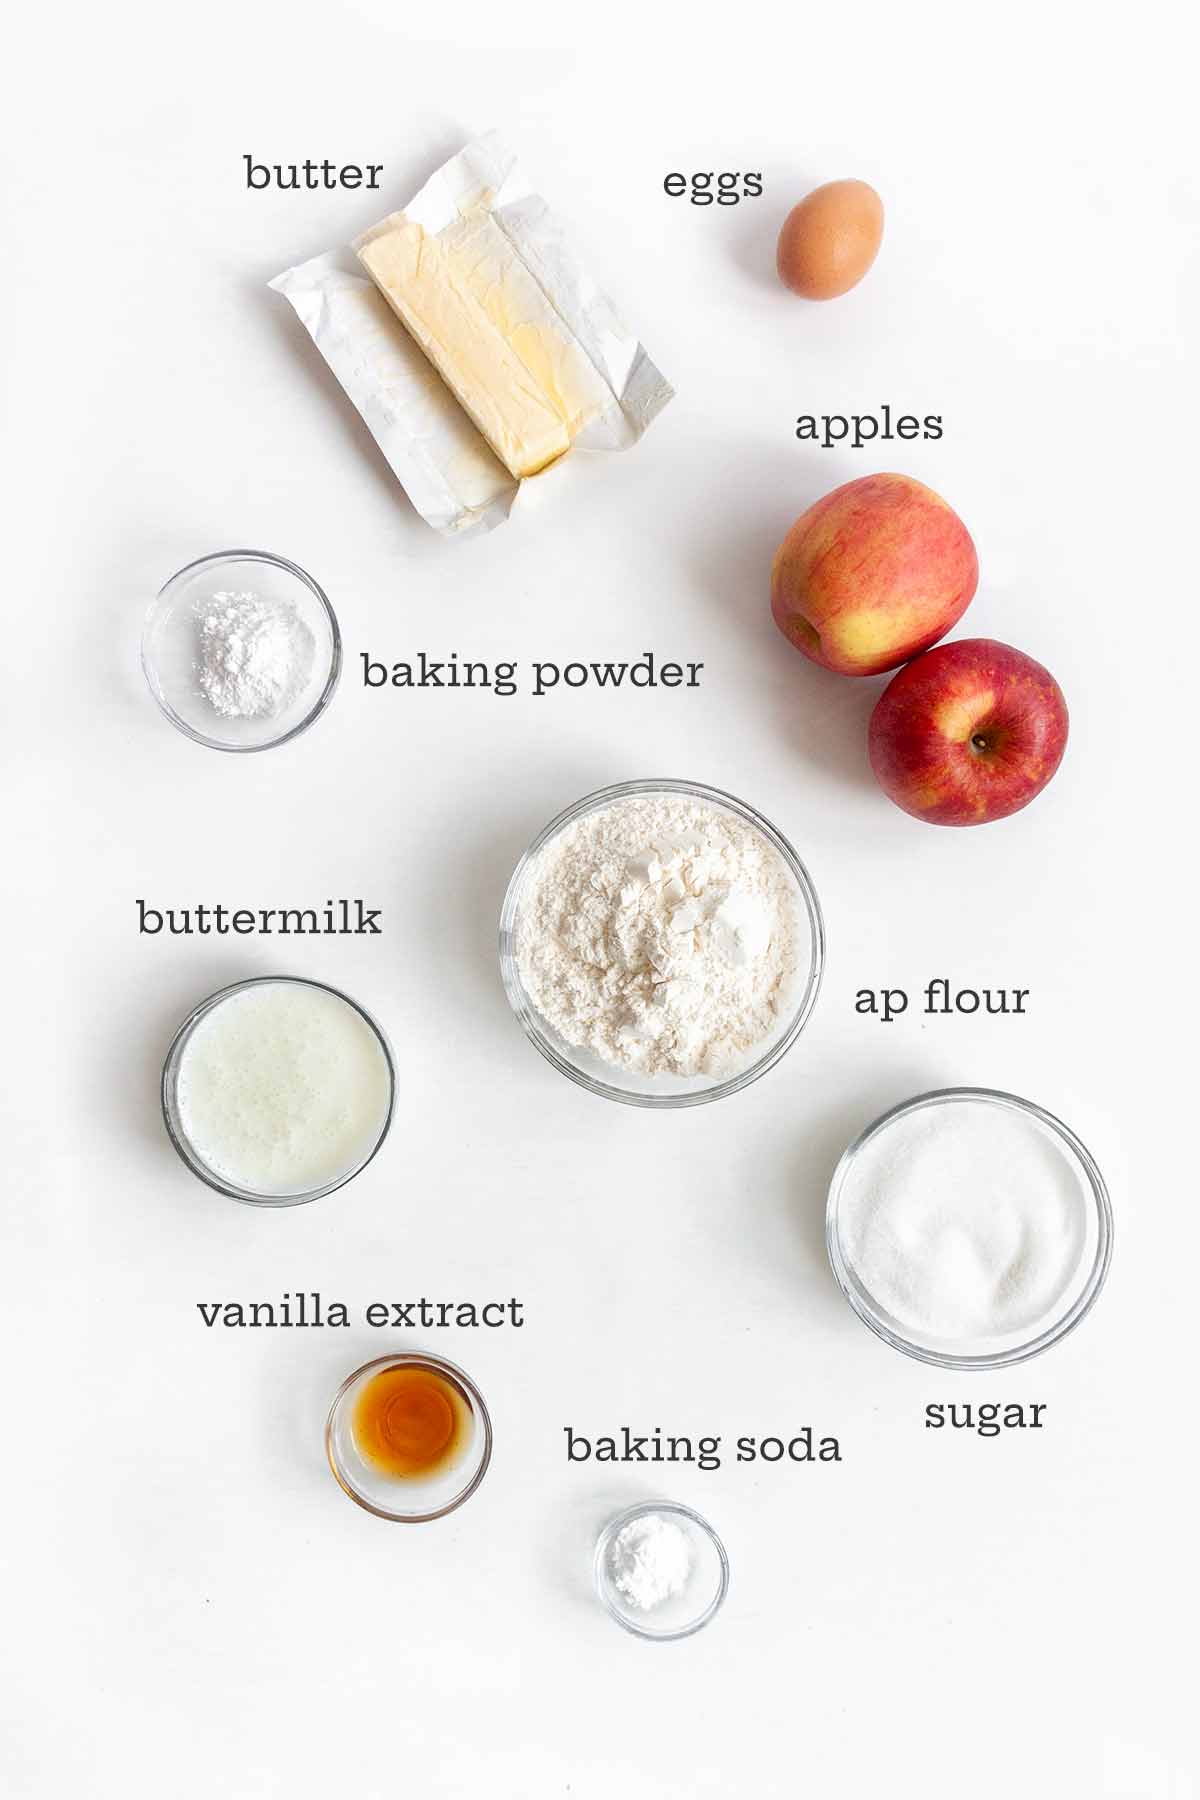 Ingredients for apple cake--butter, eggs, apples, baking powder, flour, buttermilk, sugar, vanilla, and baking soda.